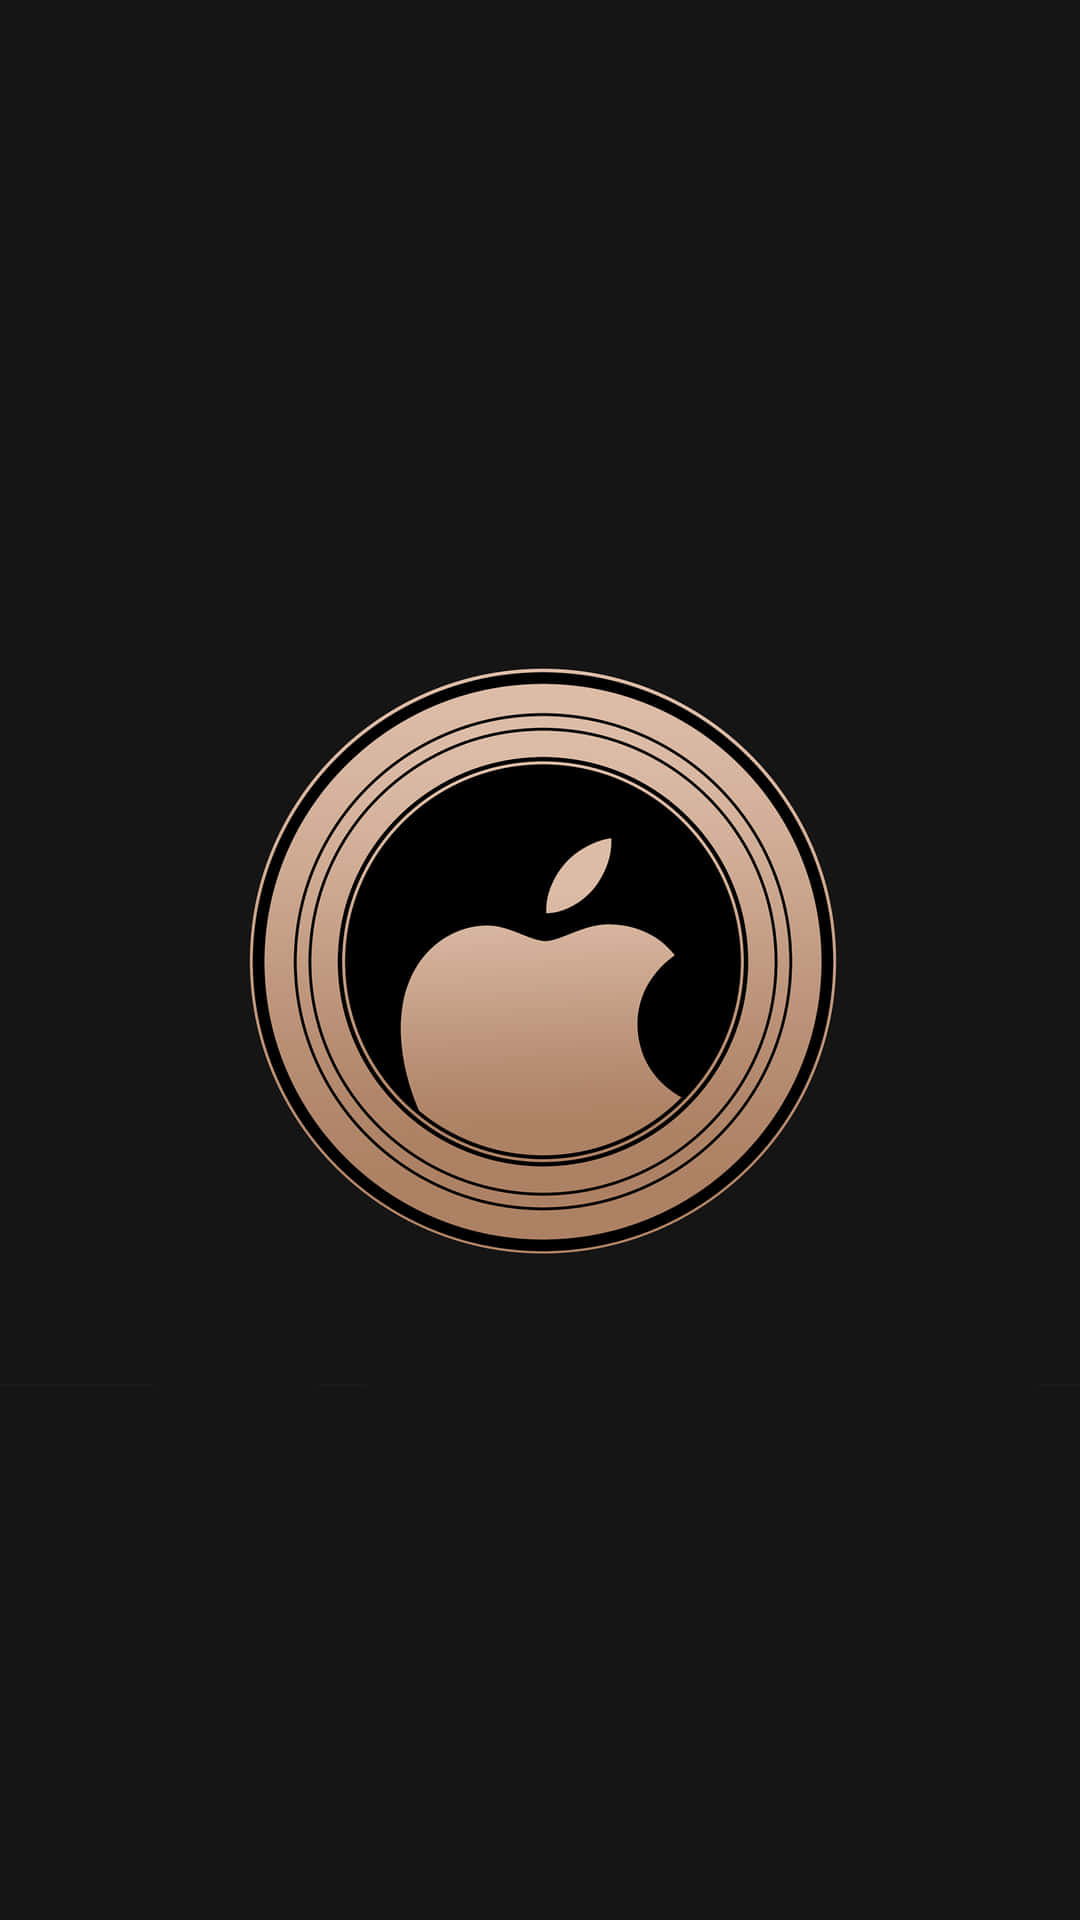 Amazing Apple's Bronze Logo In High Definition